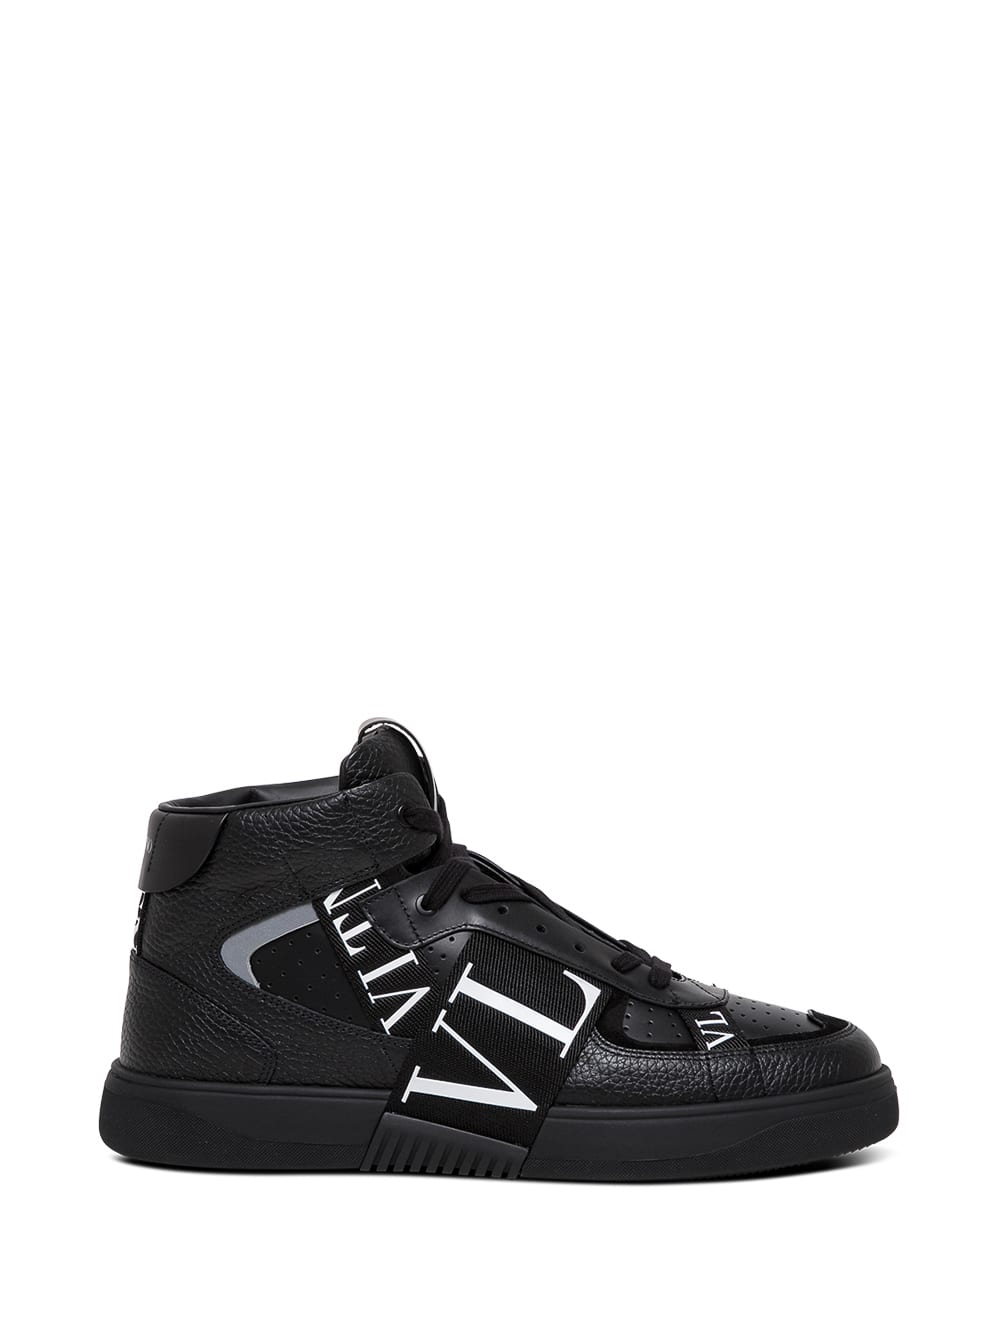 Valentino Garavani Black Leather Sneakers With Vl7n Logo